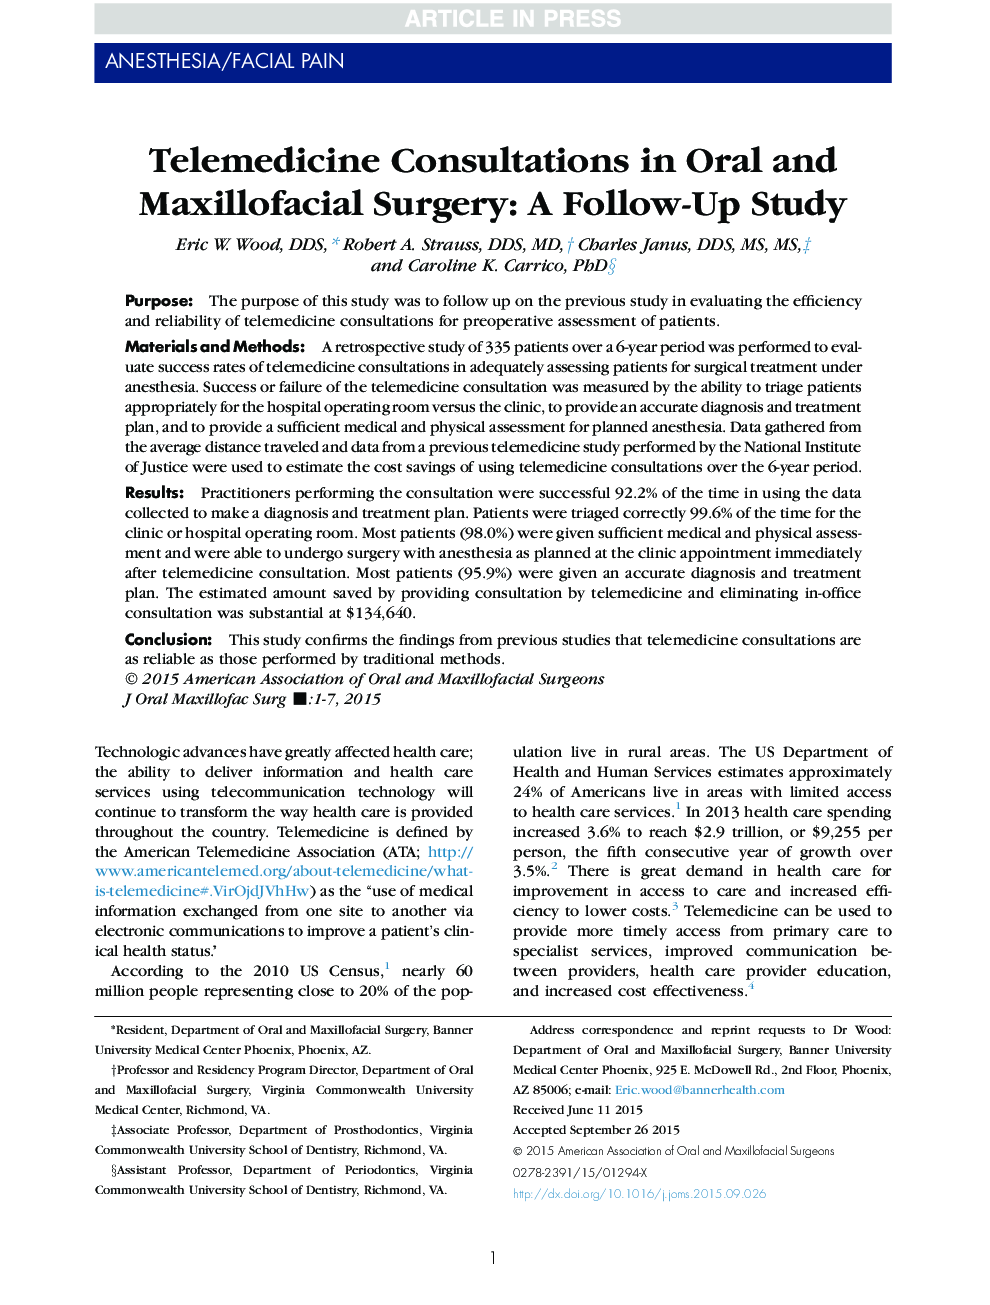 Telemedicine Consultations in Oral and Maxillofacial Surgery: A Follow-Up Study